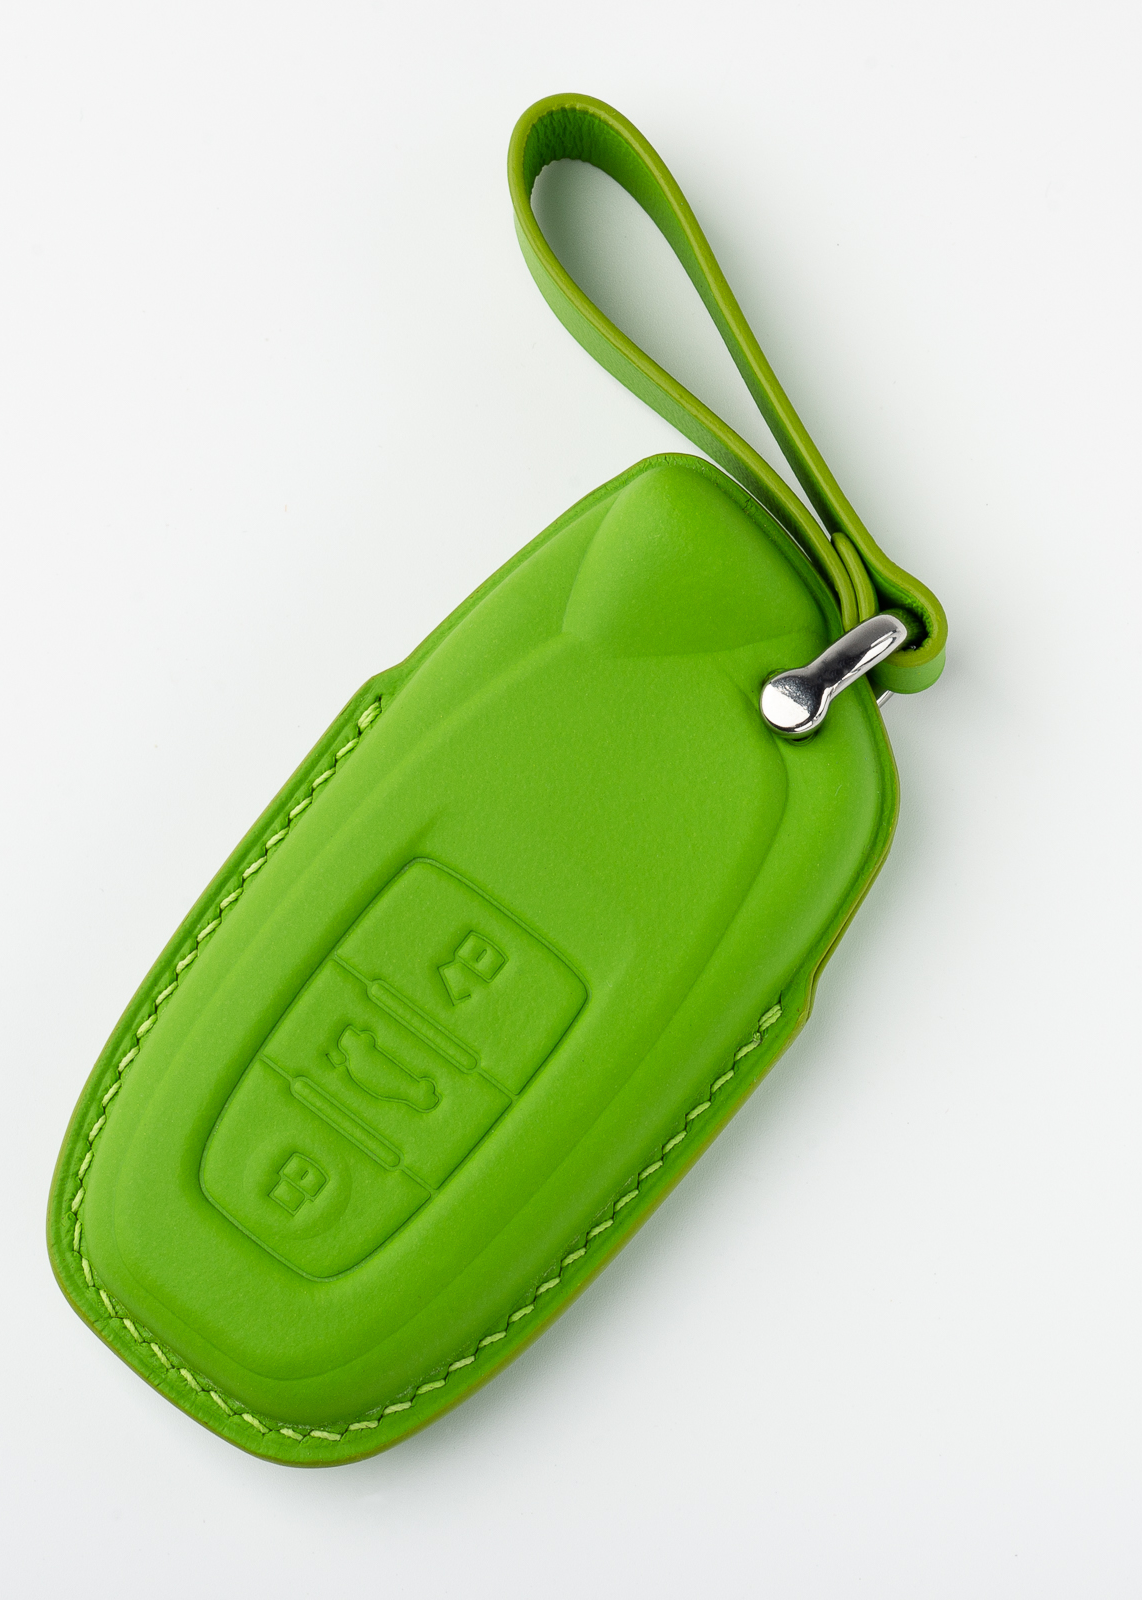 Timotheus for Lamborghini key fob cover case, Compatible with Lamborghini key case, Handmade Genuine Leather for Lamborghini keychains | LB11